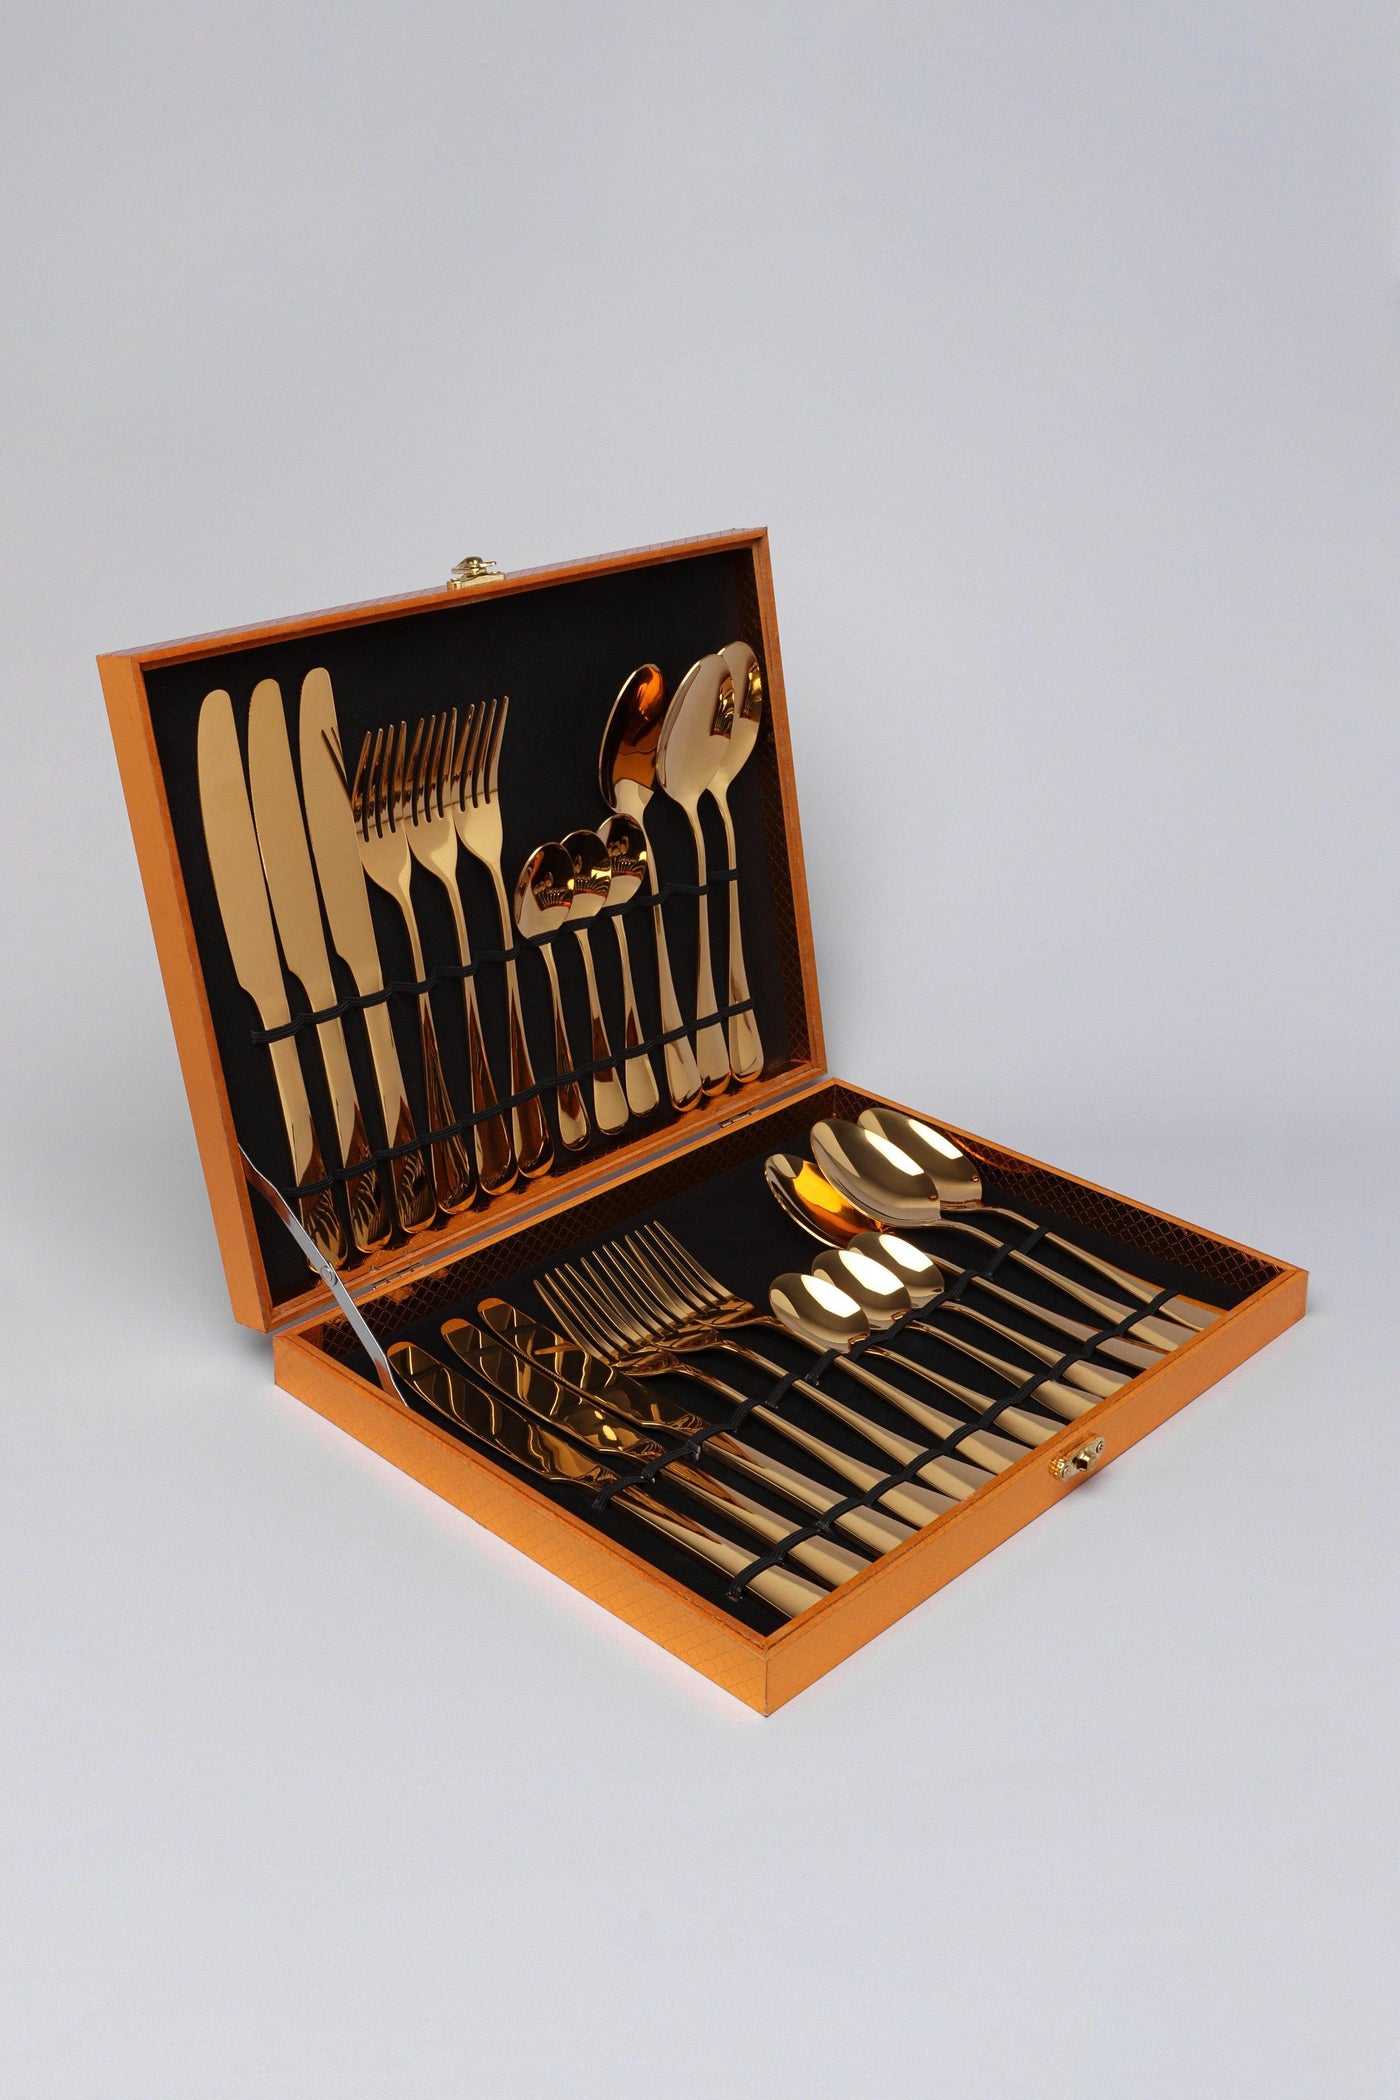 24 Piece Vermont Gold Metal Stainless Steel Flatware Cutlery Set Gift Box - G Decor